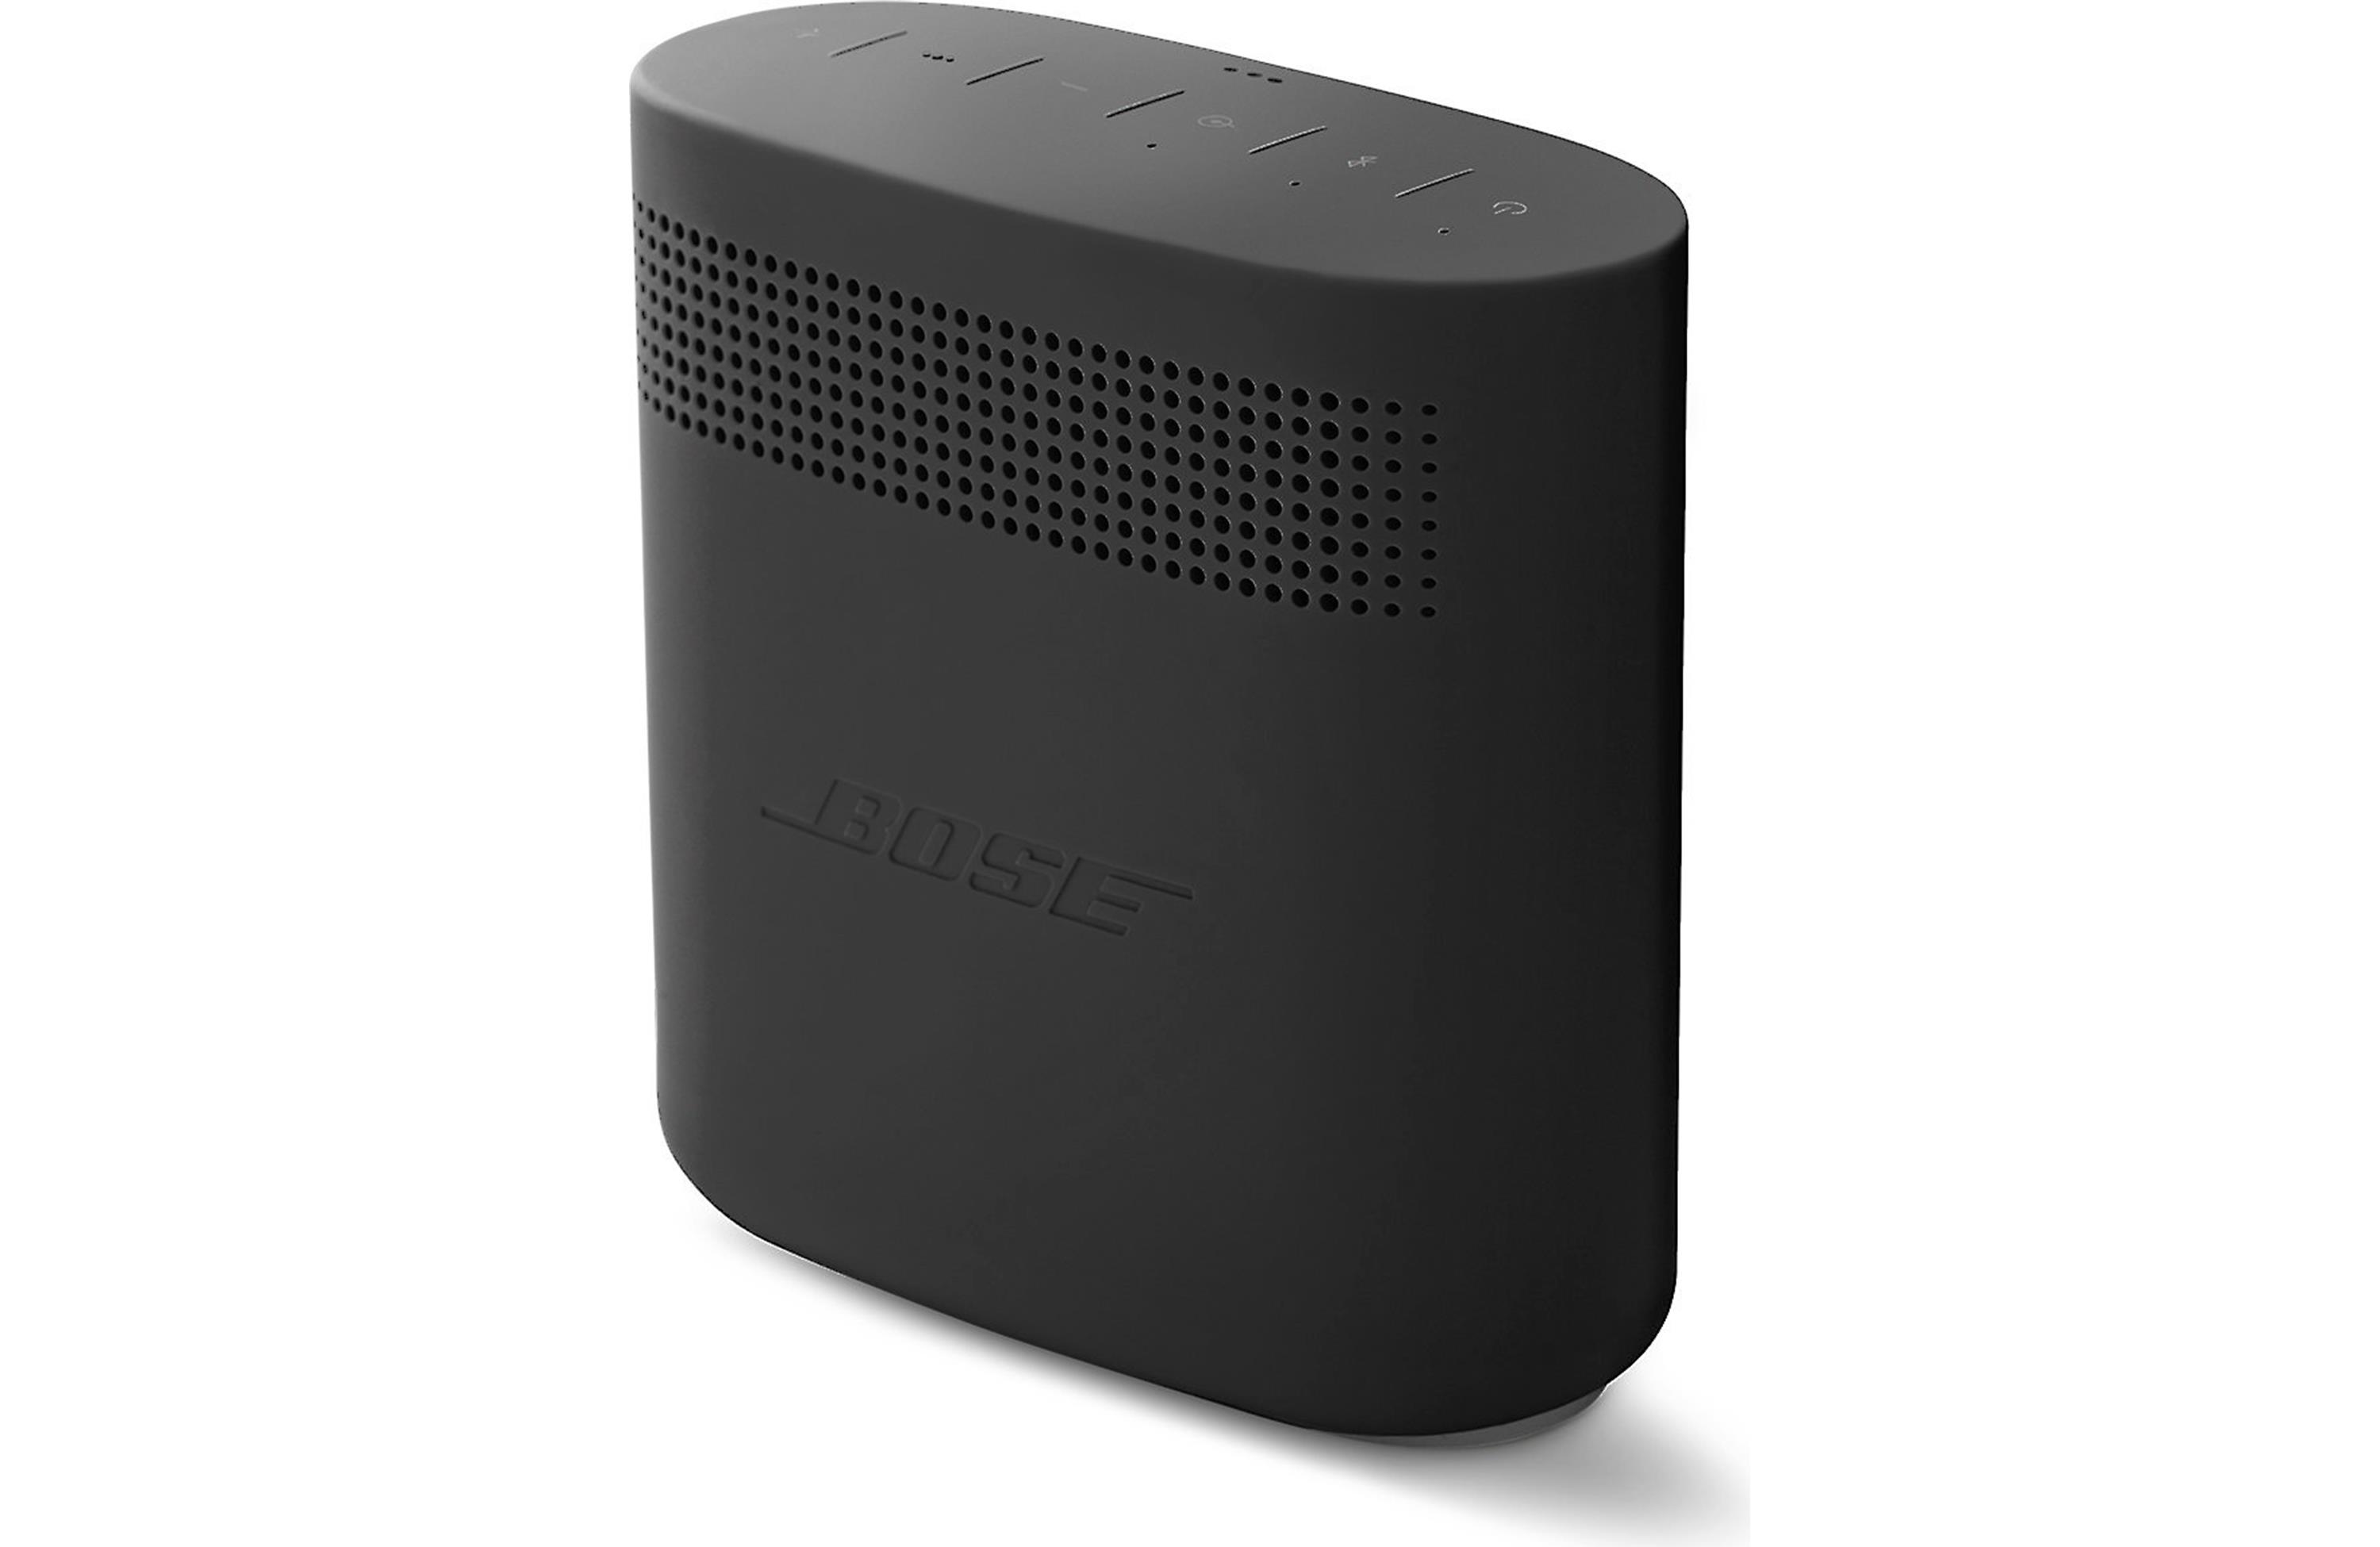 Bose soundlink bluetooth speaker update